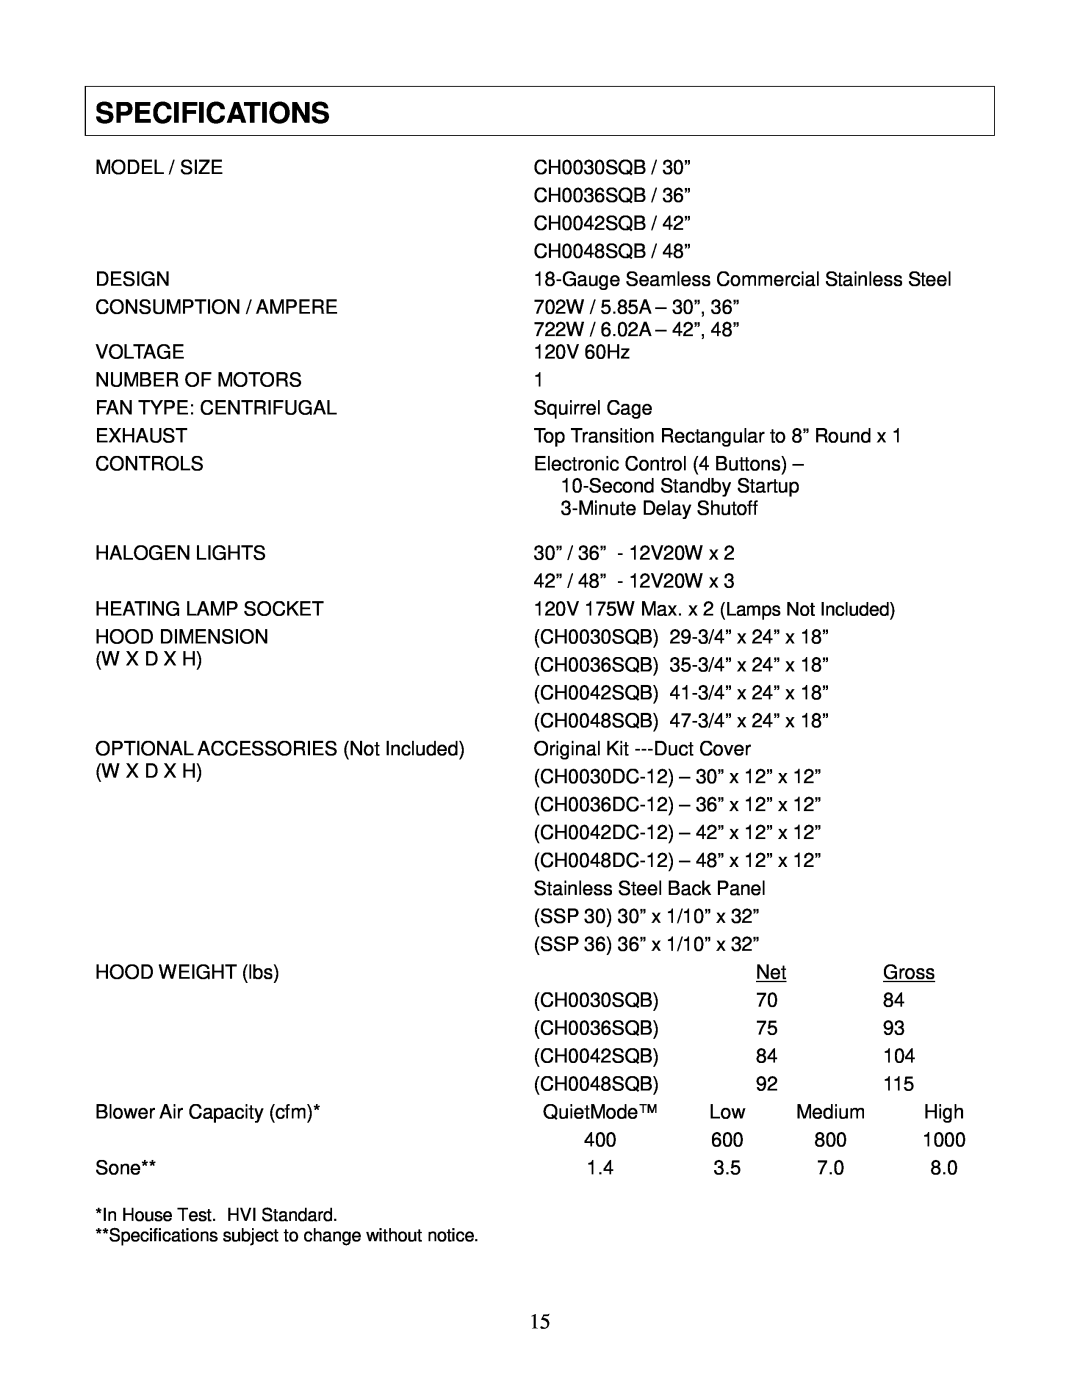 Kobe Range Hoods CH0042SQB, CH0036SQB, CH0048SQB manual Specifications 